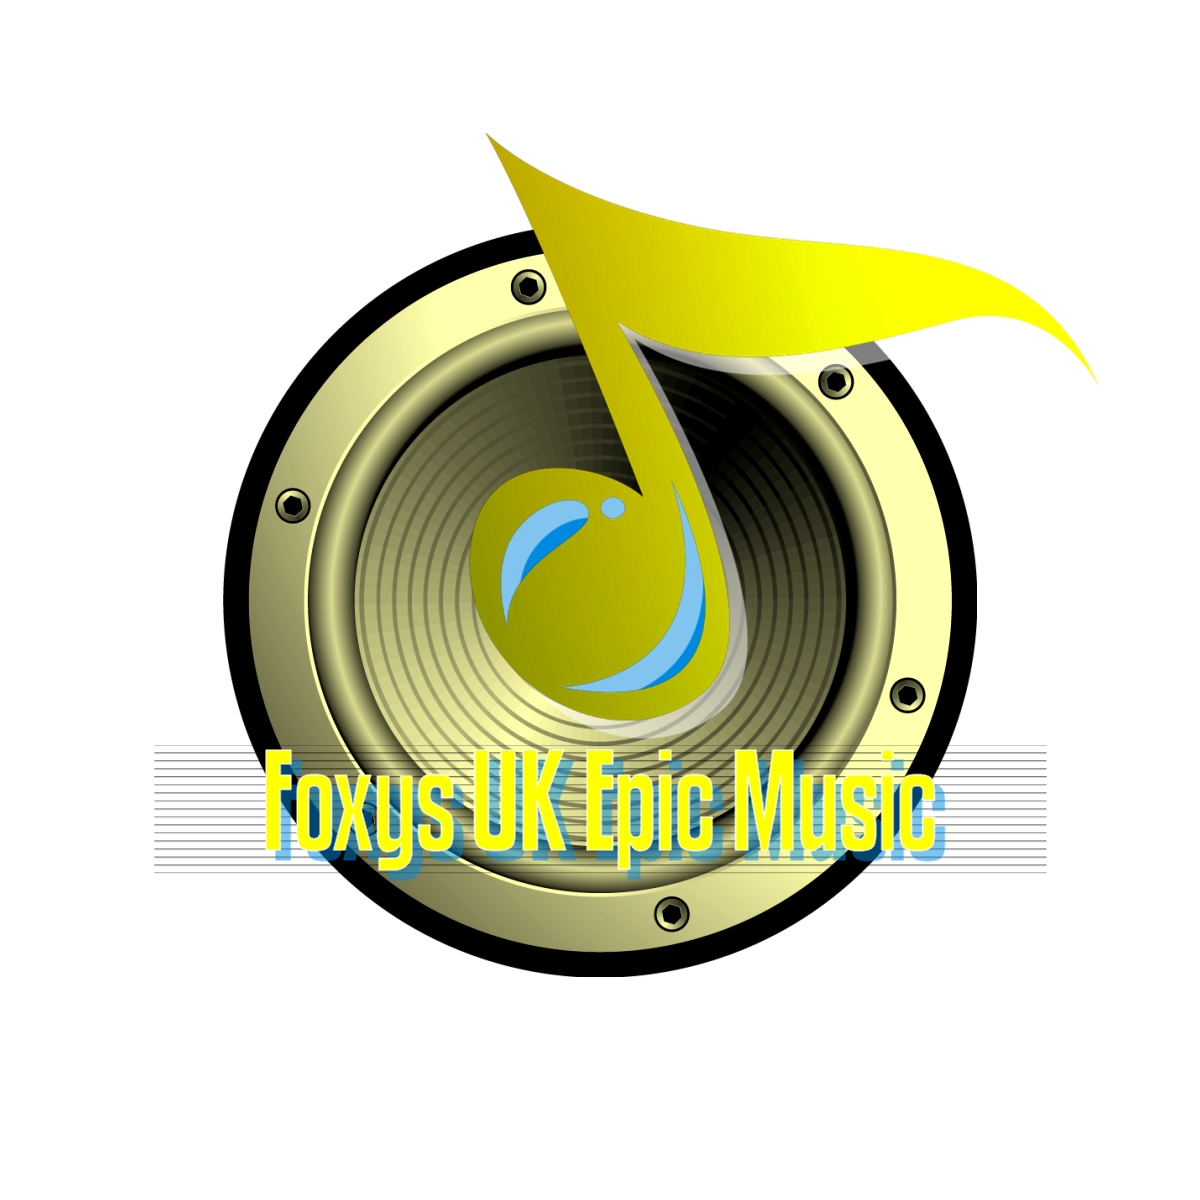 Foxys UK Epic Music